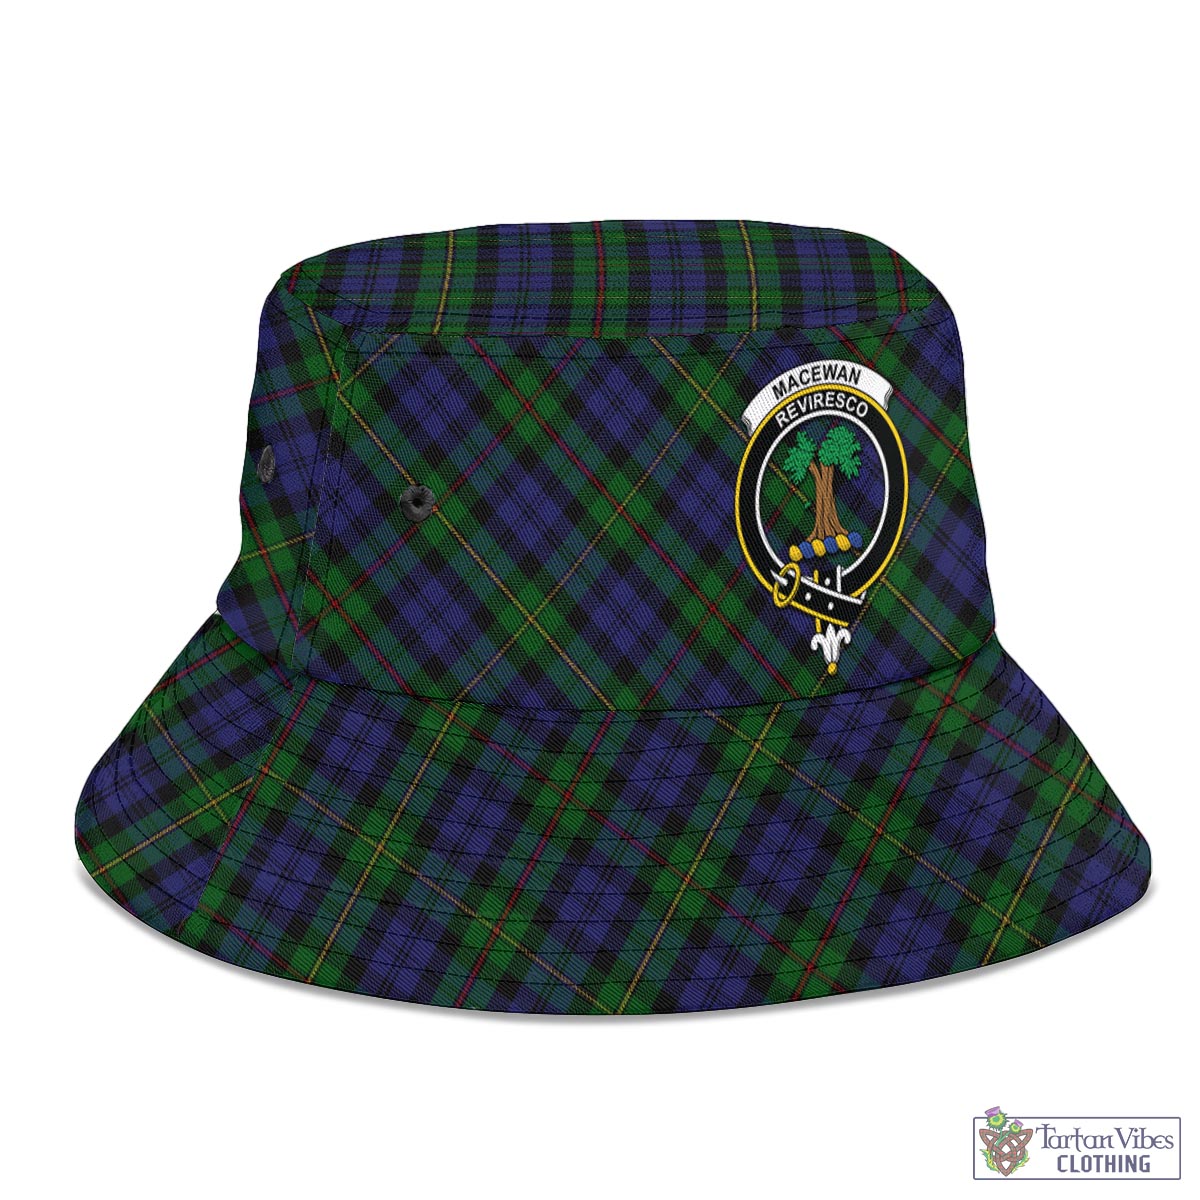 Tartan Vibes Clothing MacEwan Tartan Bucket Hat with Family Crest